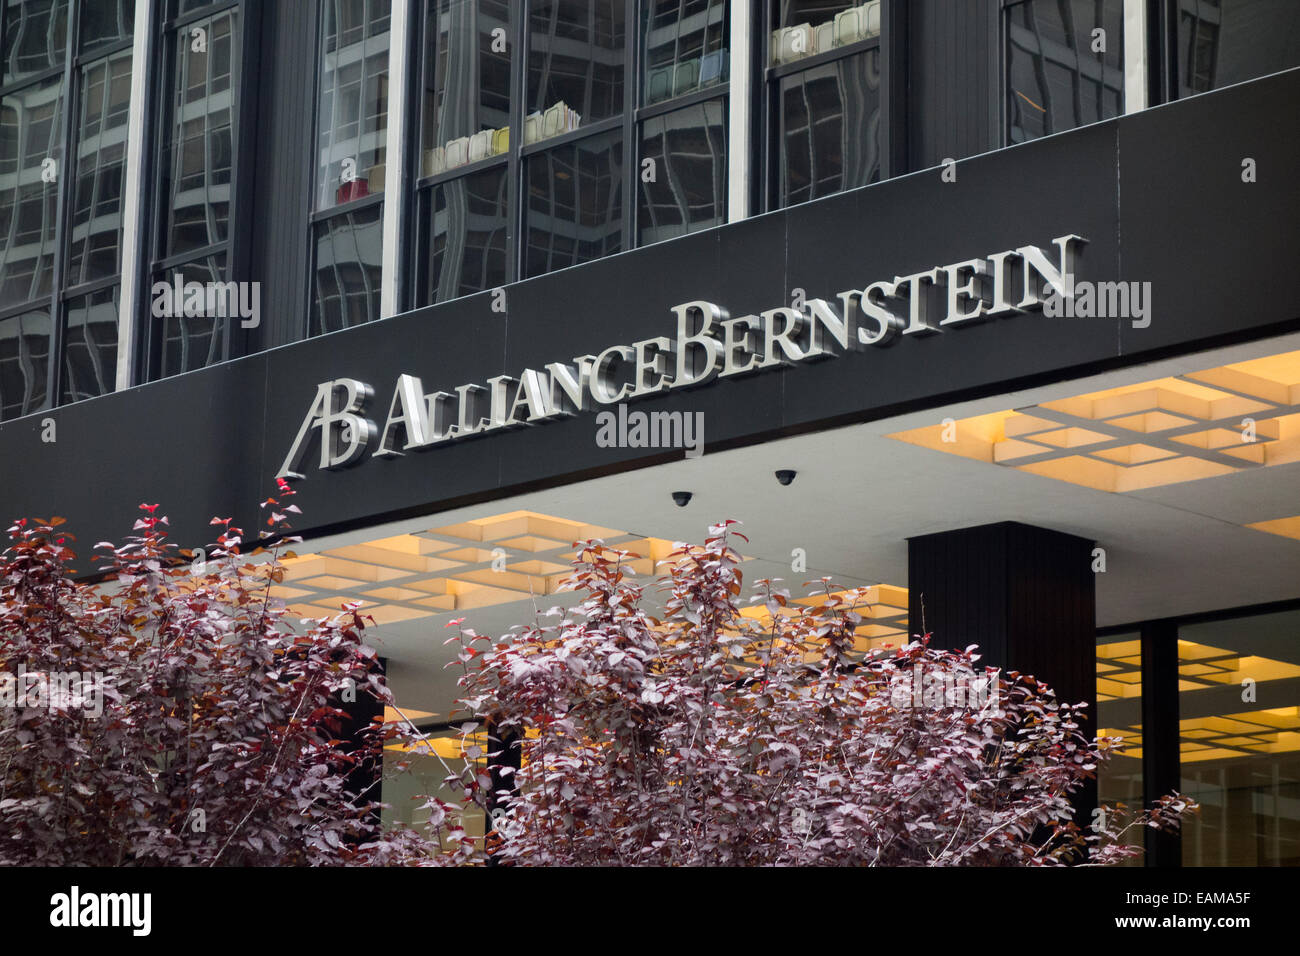 Alliance Bernstein asset management company in NYC Stock Photo